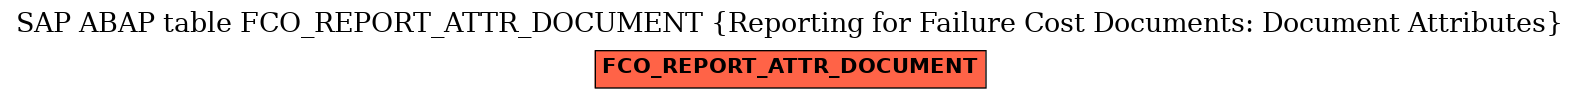 E-R Diagram for table FCO_REPORT_ATTR_DOCUMENT (Reporting for Failure Cost Documents: Document Attributes)